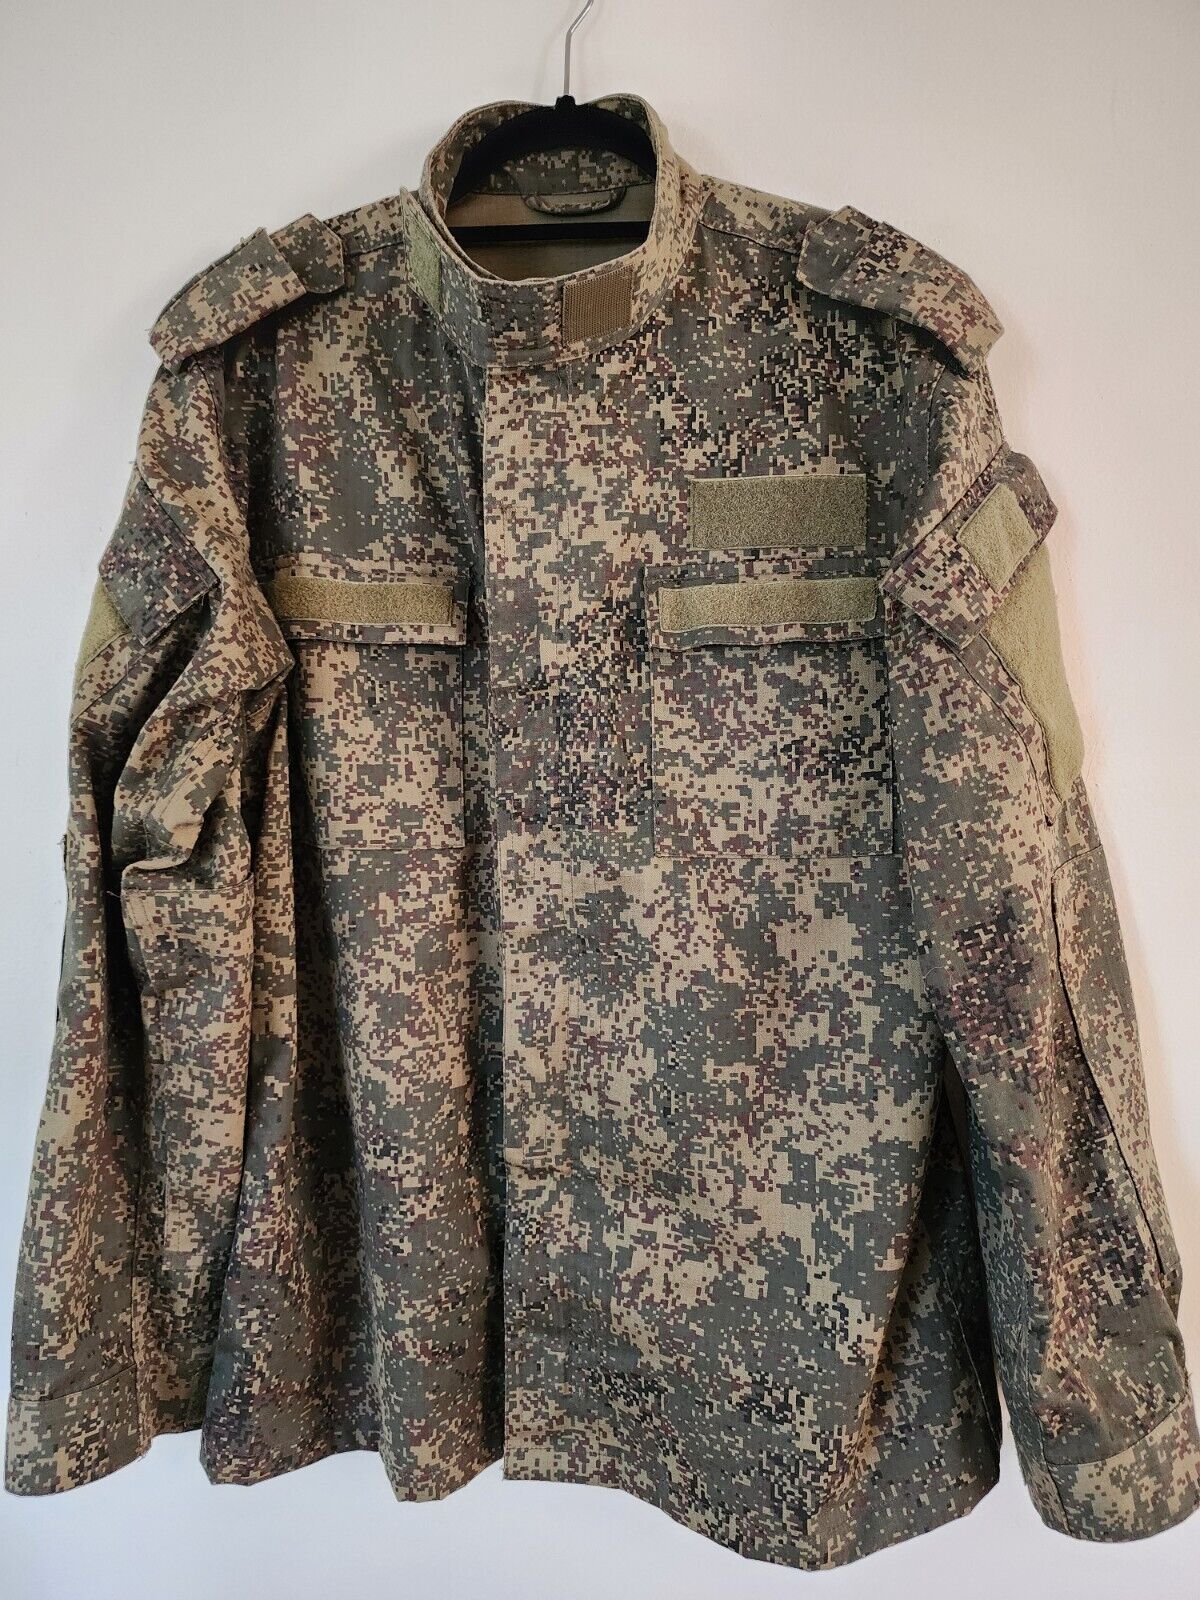 Original Russian Army Military Uniform Ratnik 1st Generation Jacket Coat